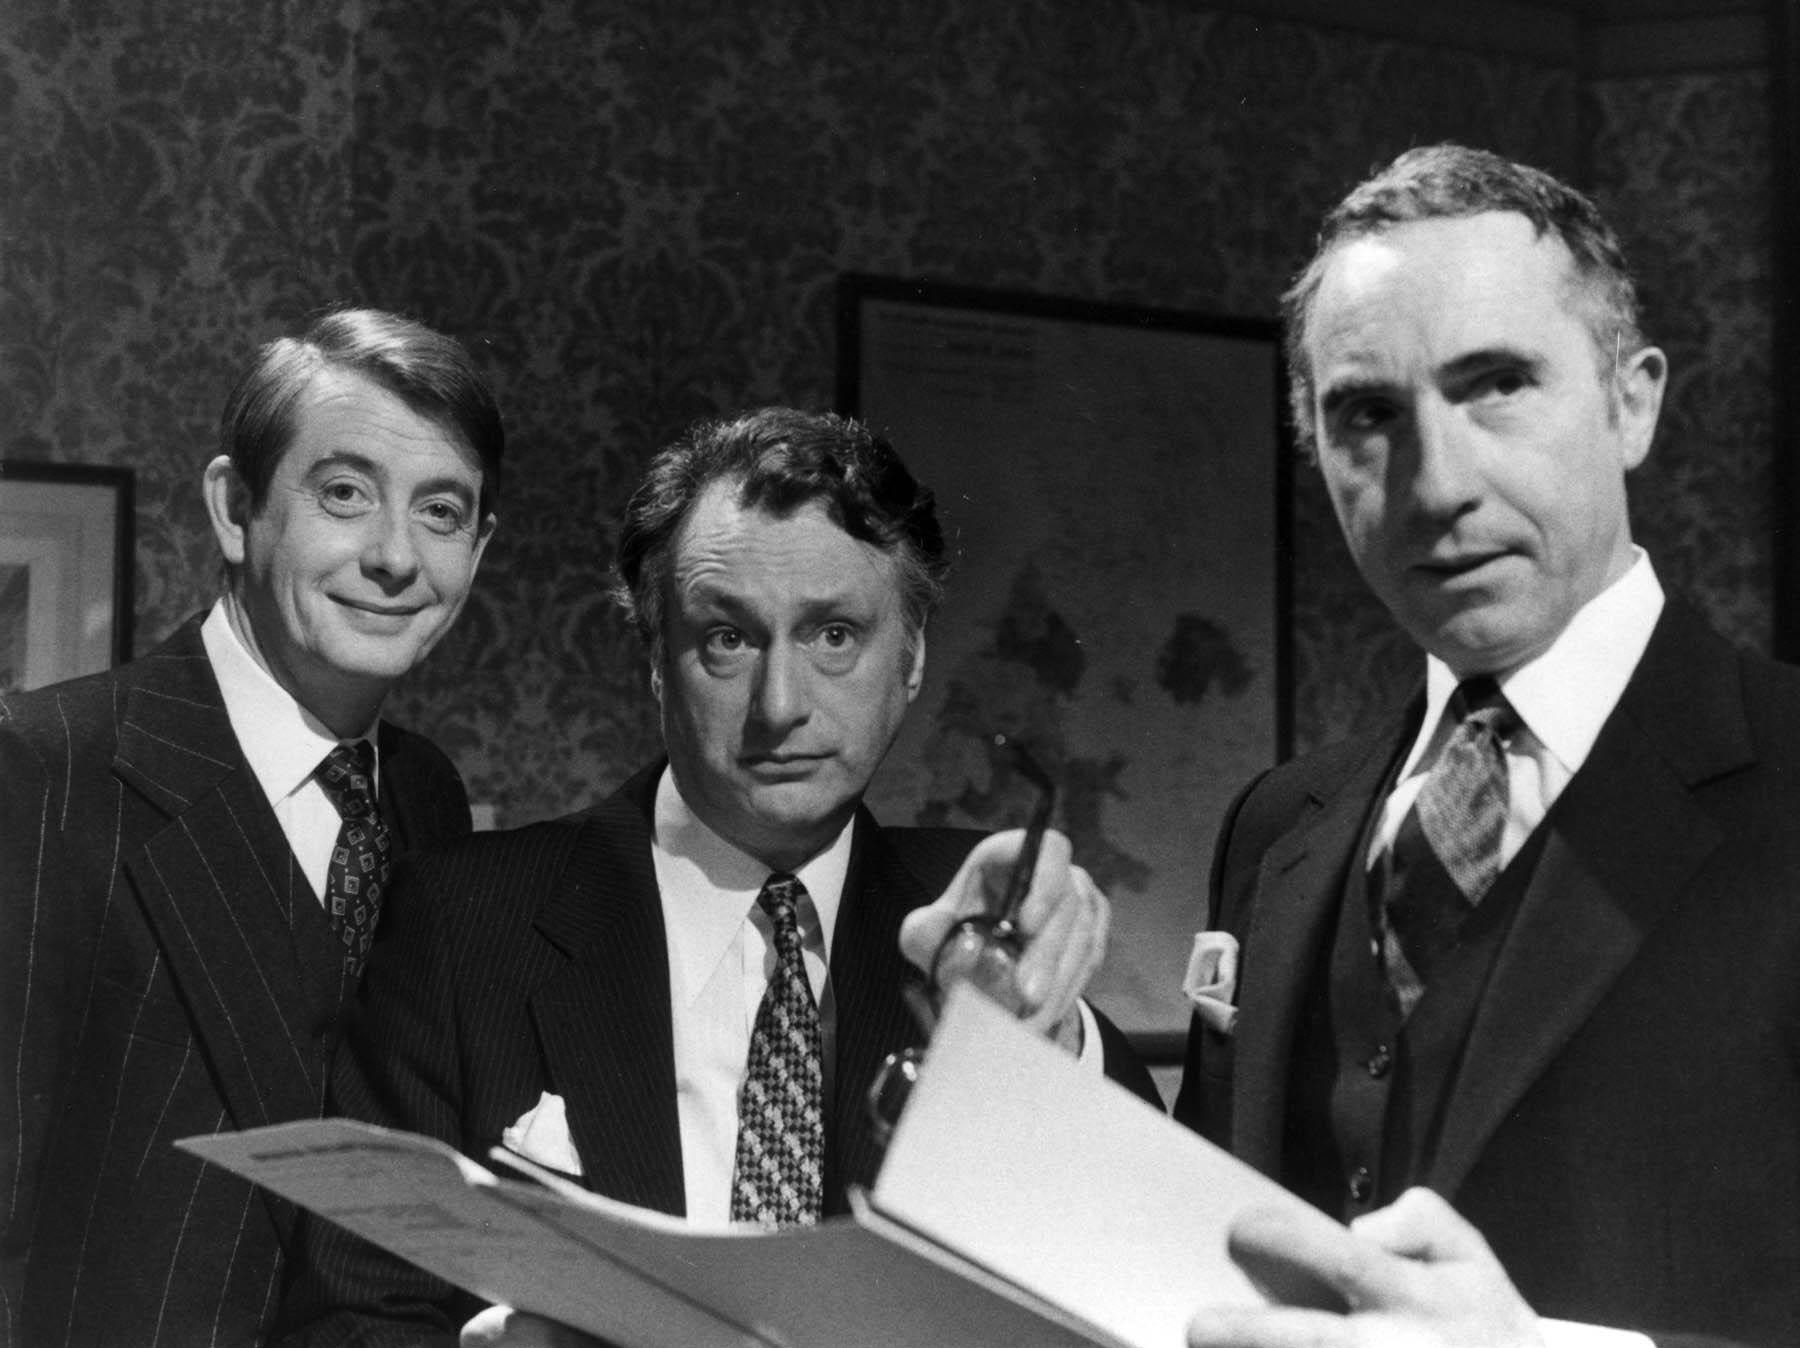 Derek Fowld (left) with Sir Nigel Hawthorne and Paul Eddington in Yes, Minister